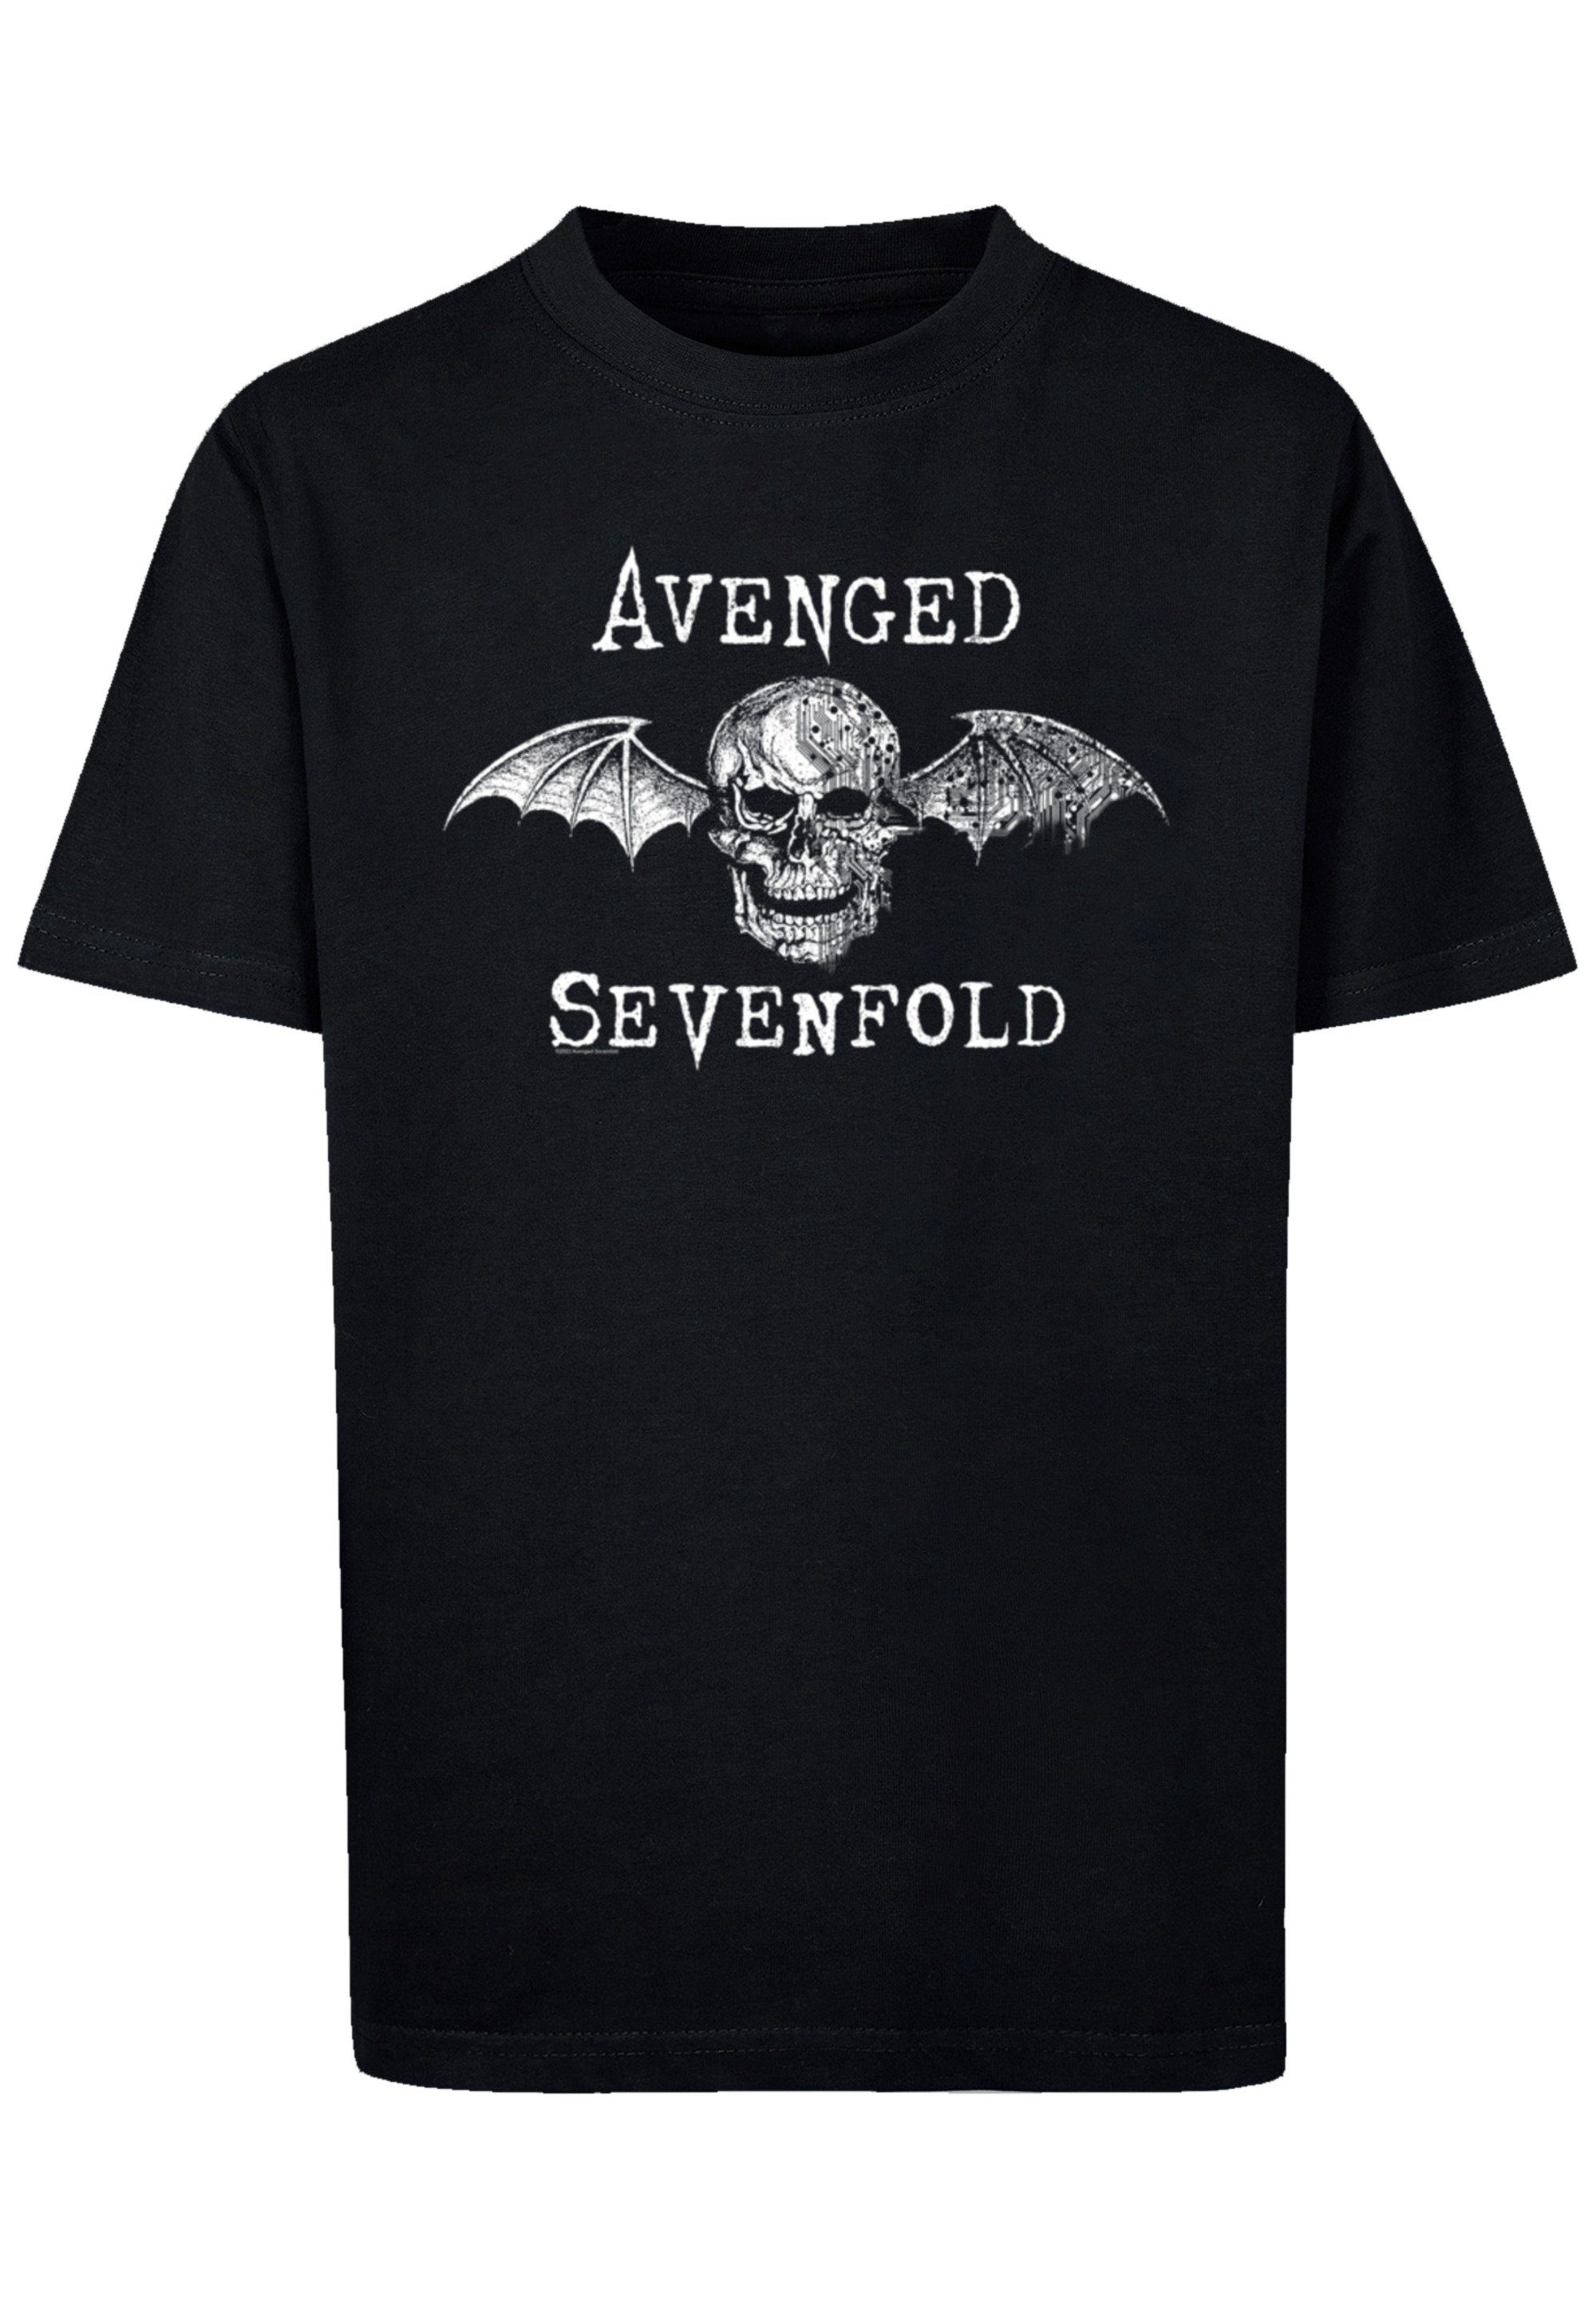 Rock-Musik Qualität, Band F4NT4STIC Avenged Sevenfold Premium Cyborg T-Shirt Bat Band, Rock Metal